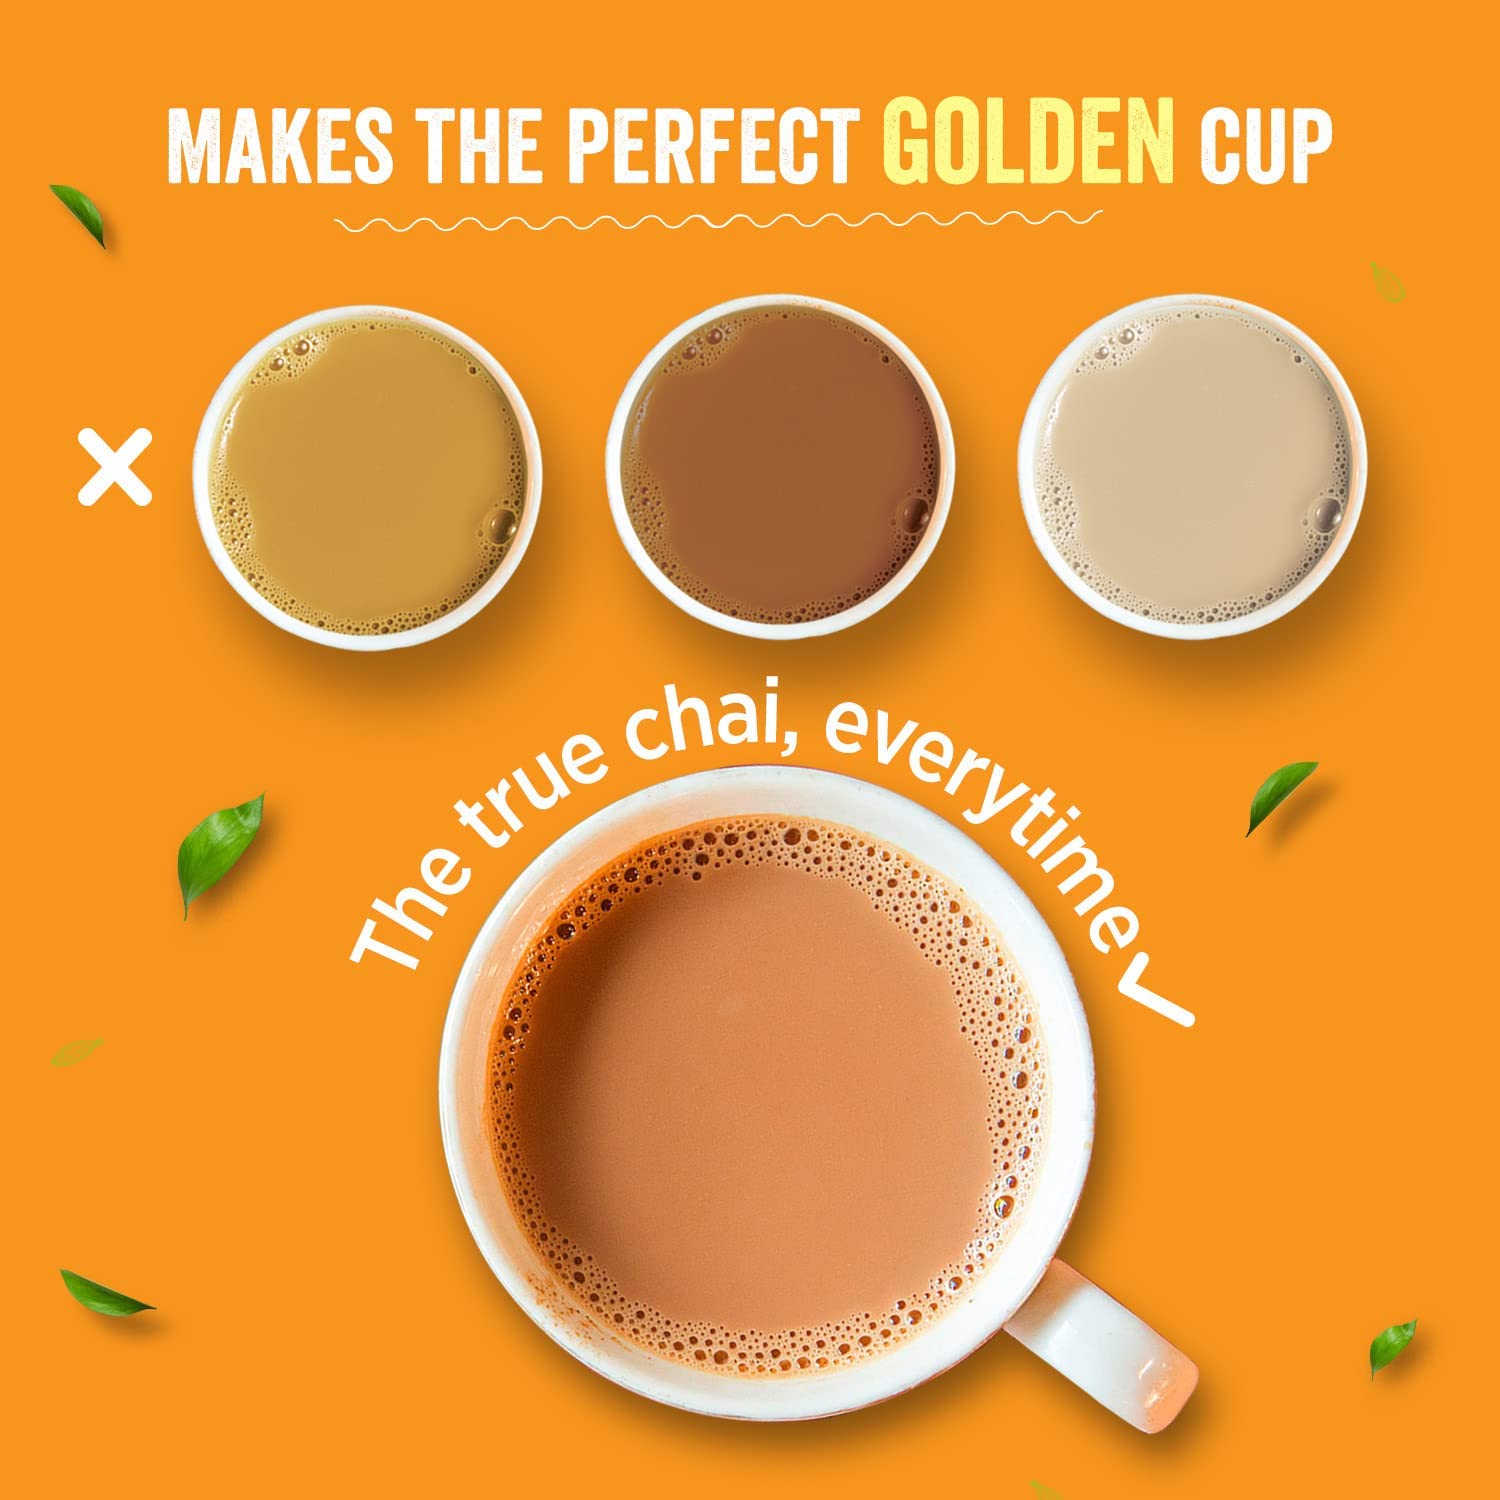 Chaayos Instant Tea Premix - Masala Flavour - Low Sugar (30 Sachets) | Instant Tea | Tea Premix | Masala Tea | Masala Chai | Assam Tea | Flavored Tea | Tea Masala Mix